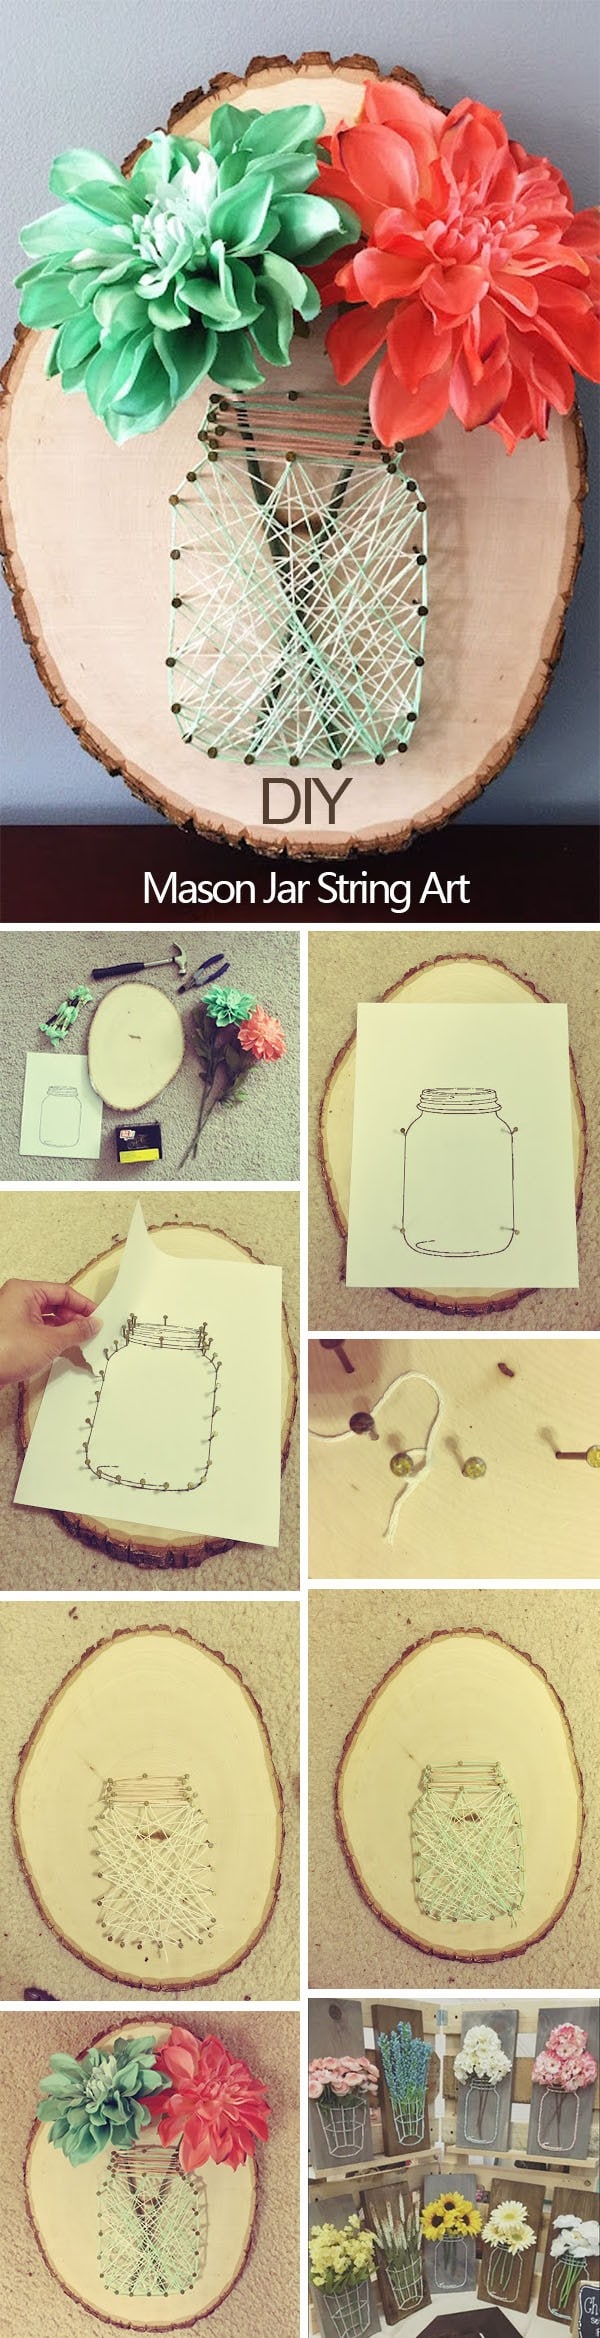 DIY manson jar strubg art wedding decoration ideas